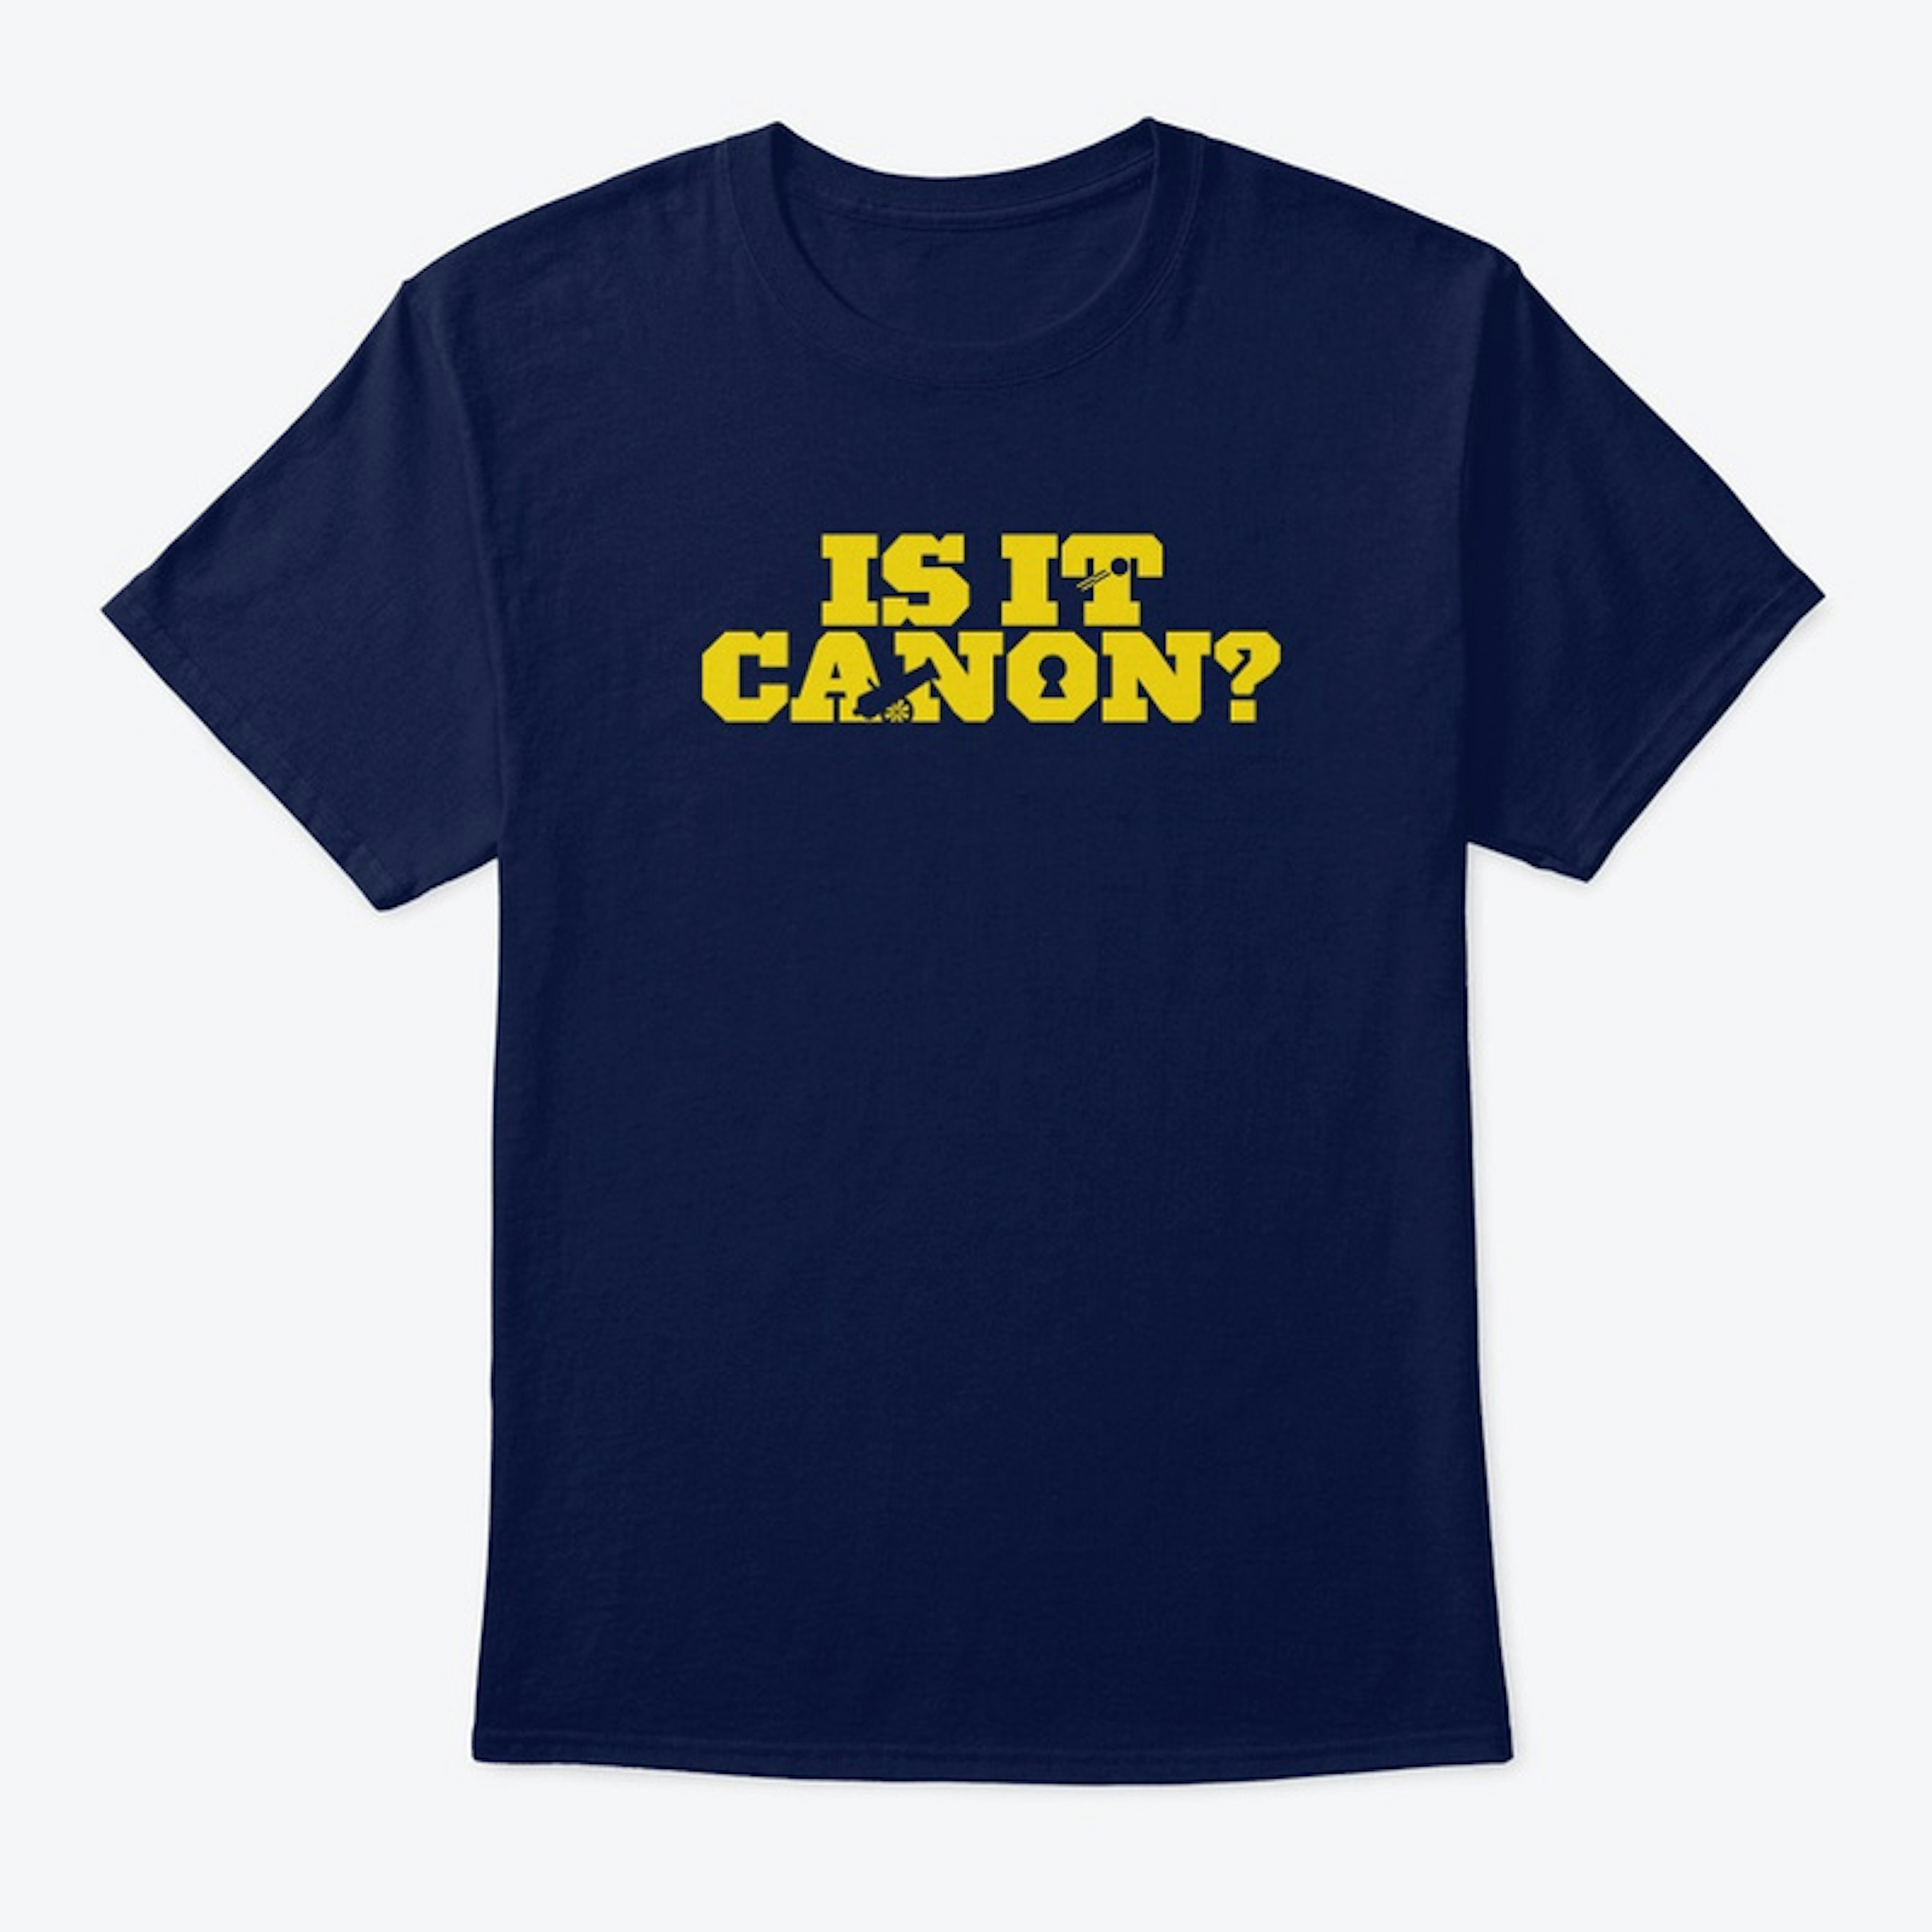 Is It Canon?